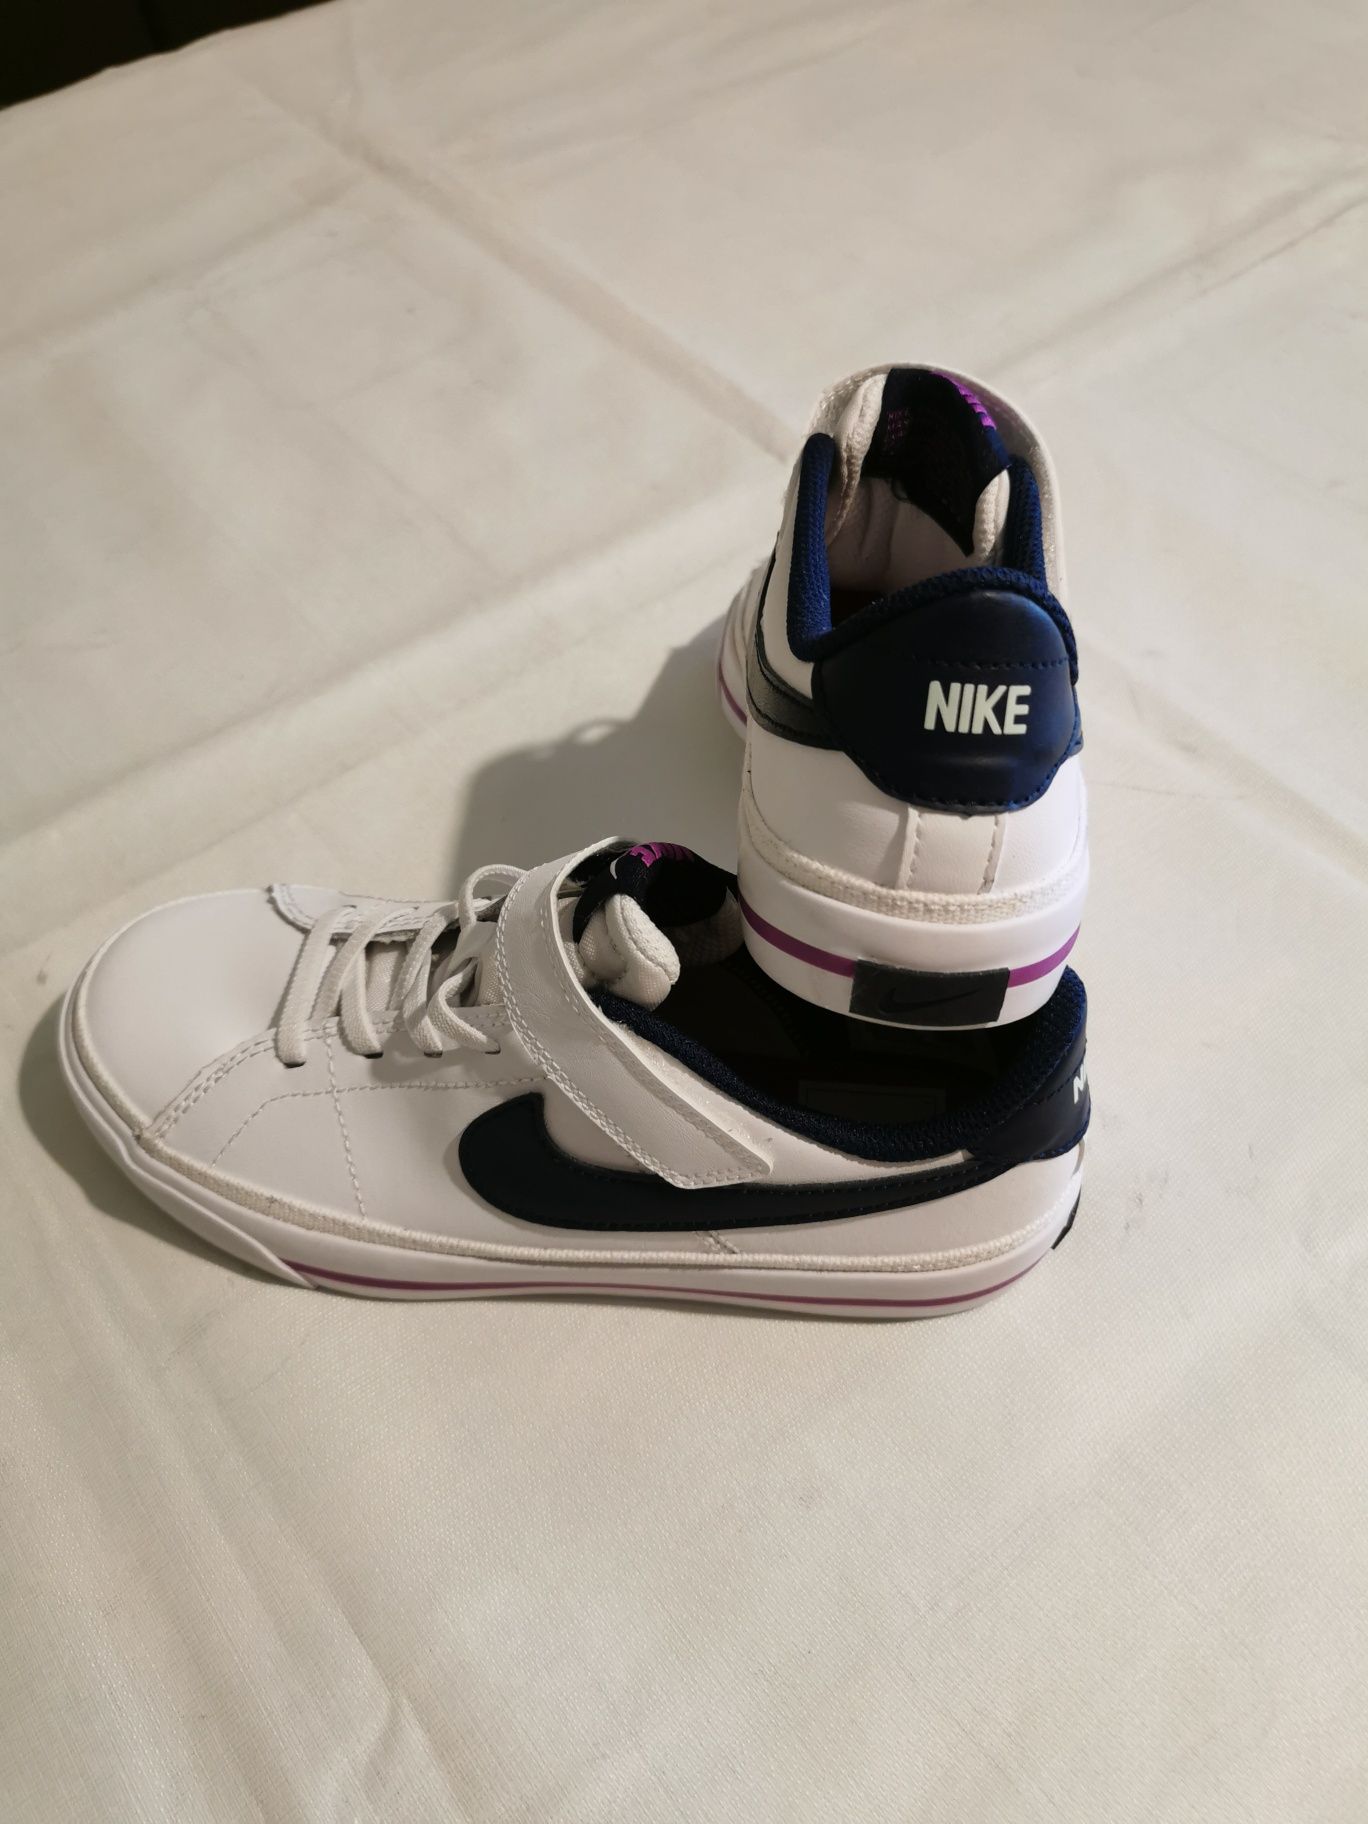 Adidasi Nike pt copii